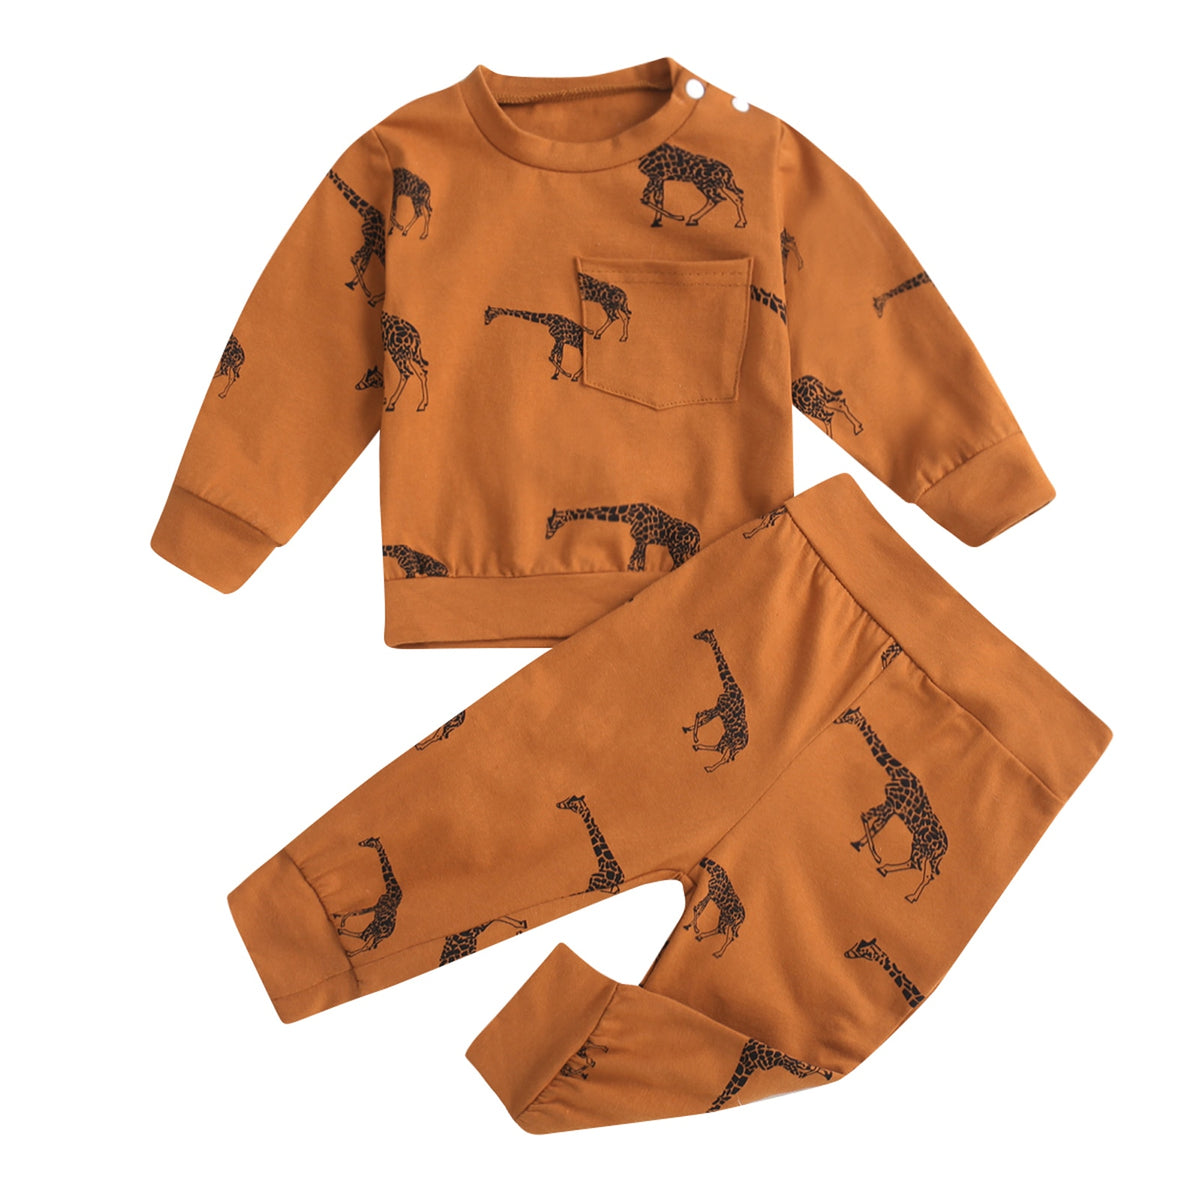 Giraffe Print Long Sleeve Sweatpants Set